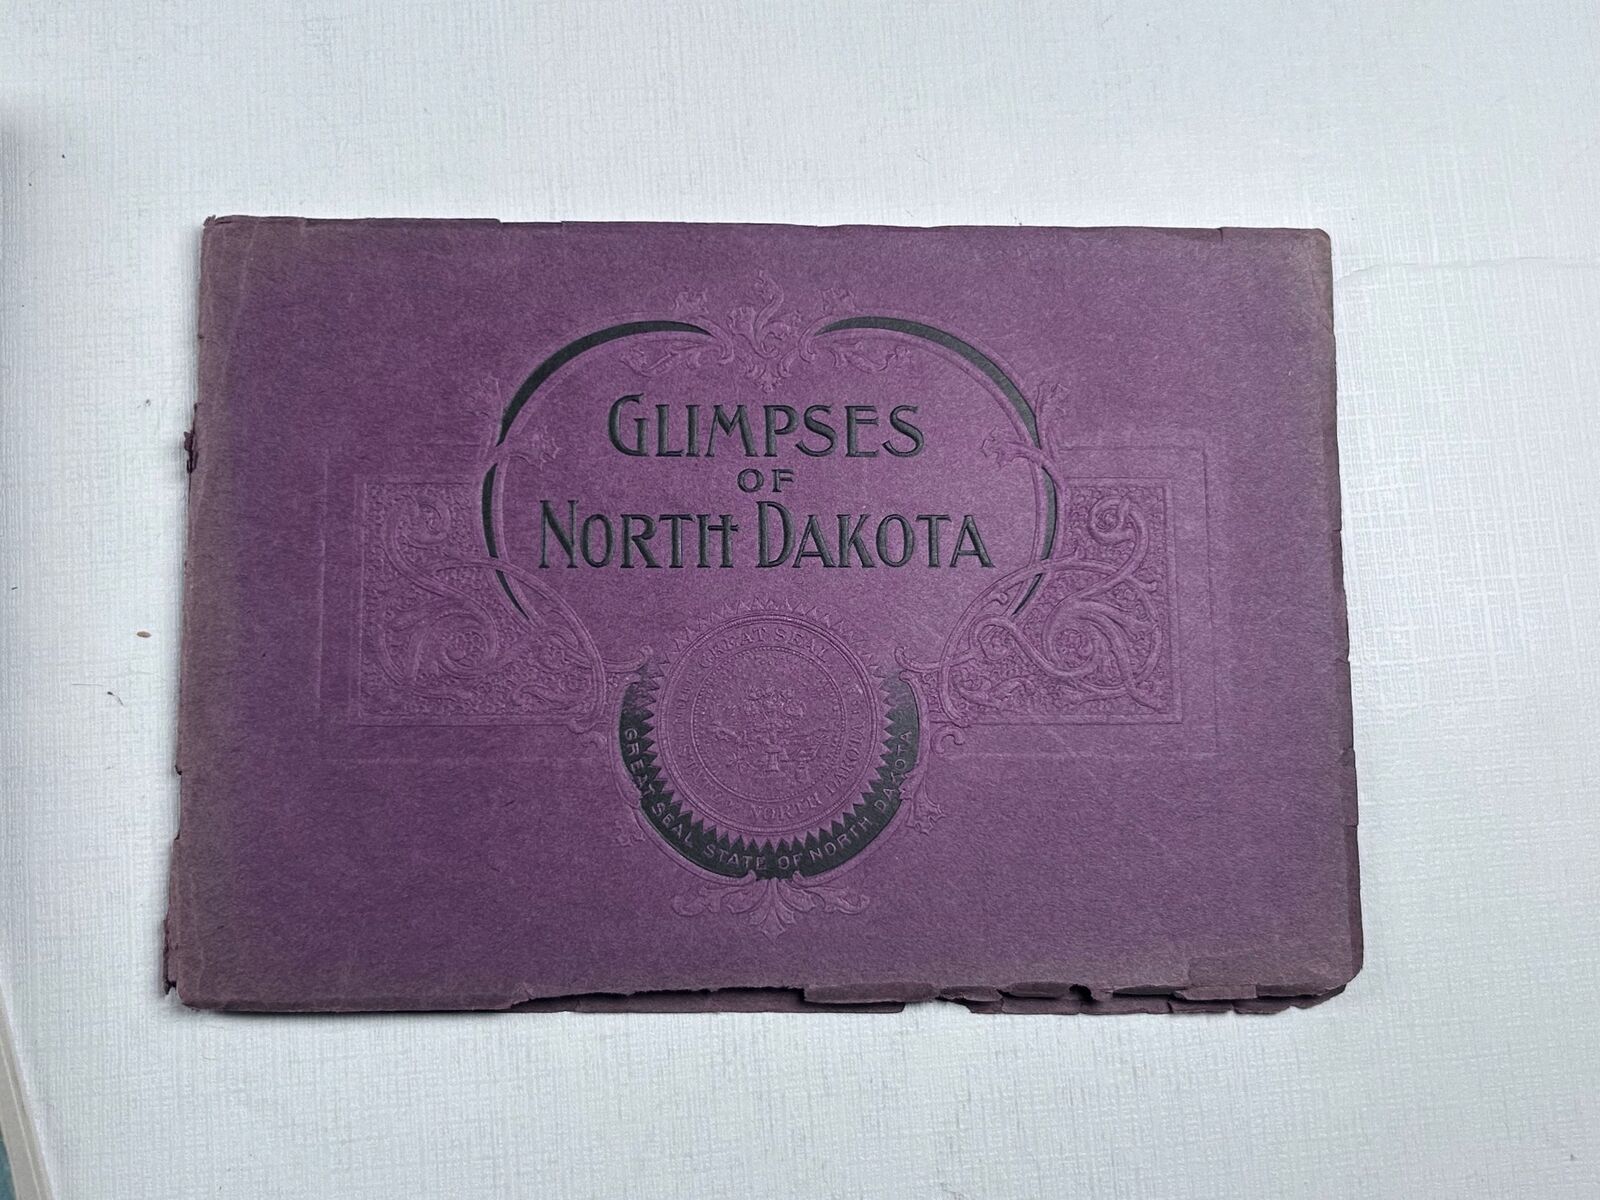 Glimpses of North Dakota Pan American Expo Commission 1901